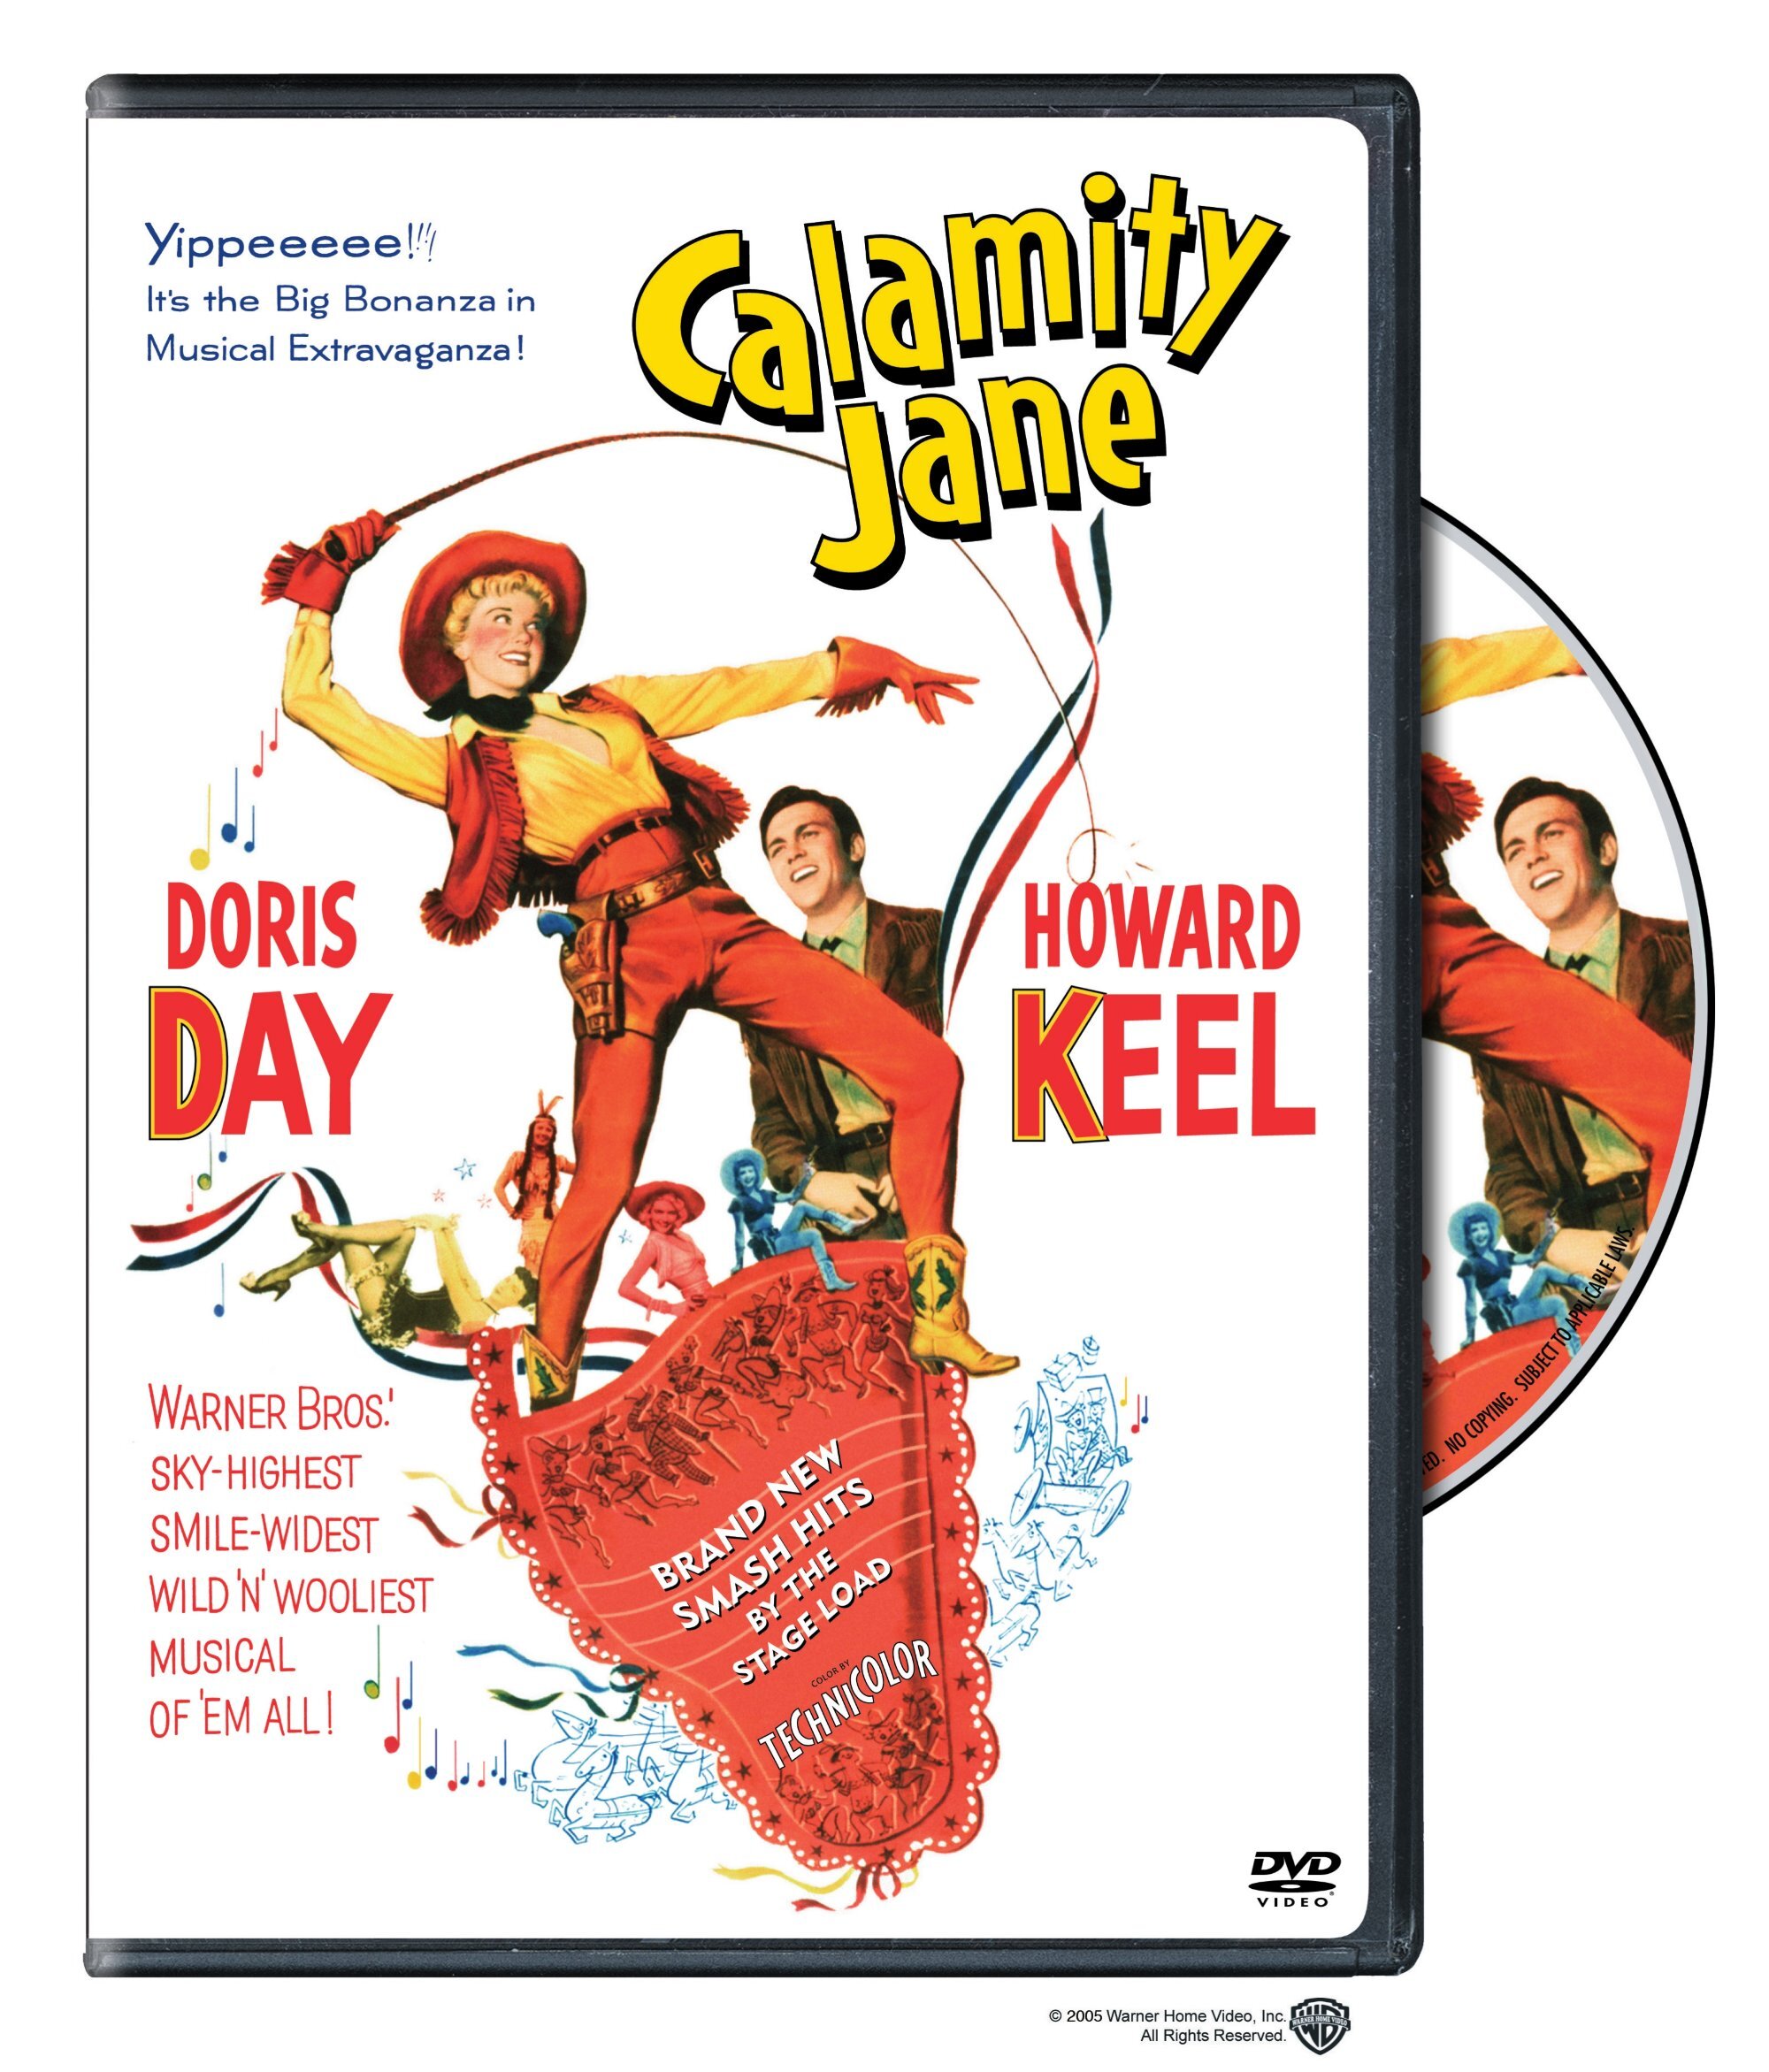 Calamity Jane - DVD [ 1953 ]  - Musical Movies On DVD - Movies On GRUV